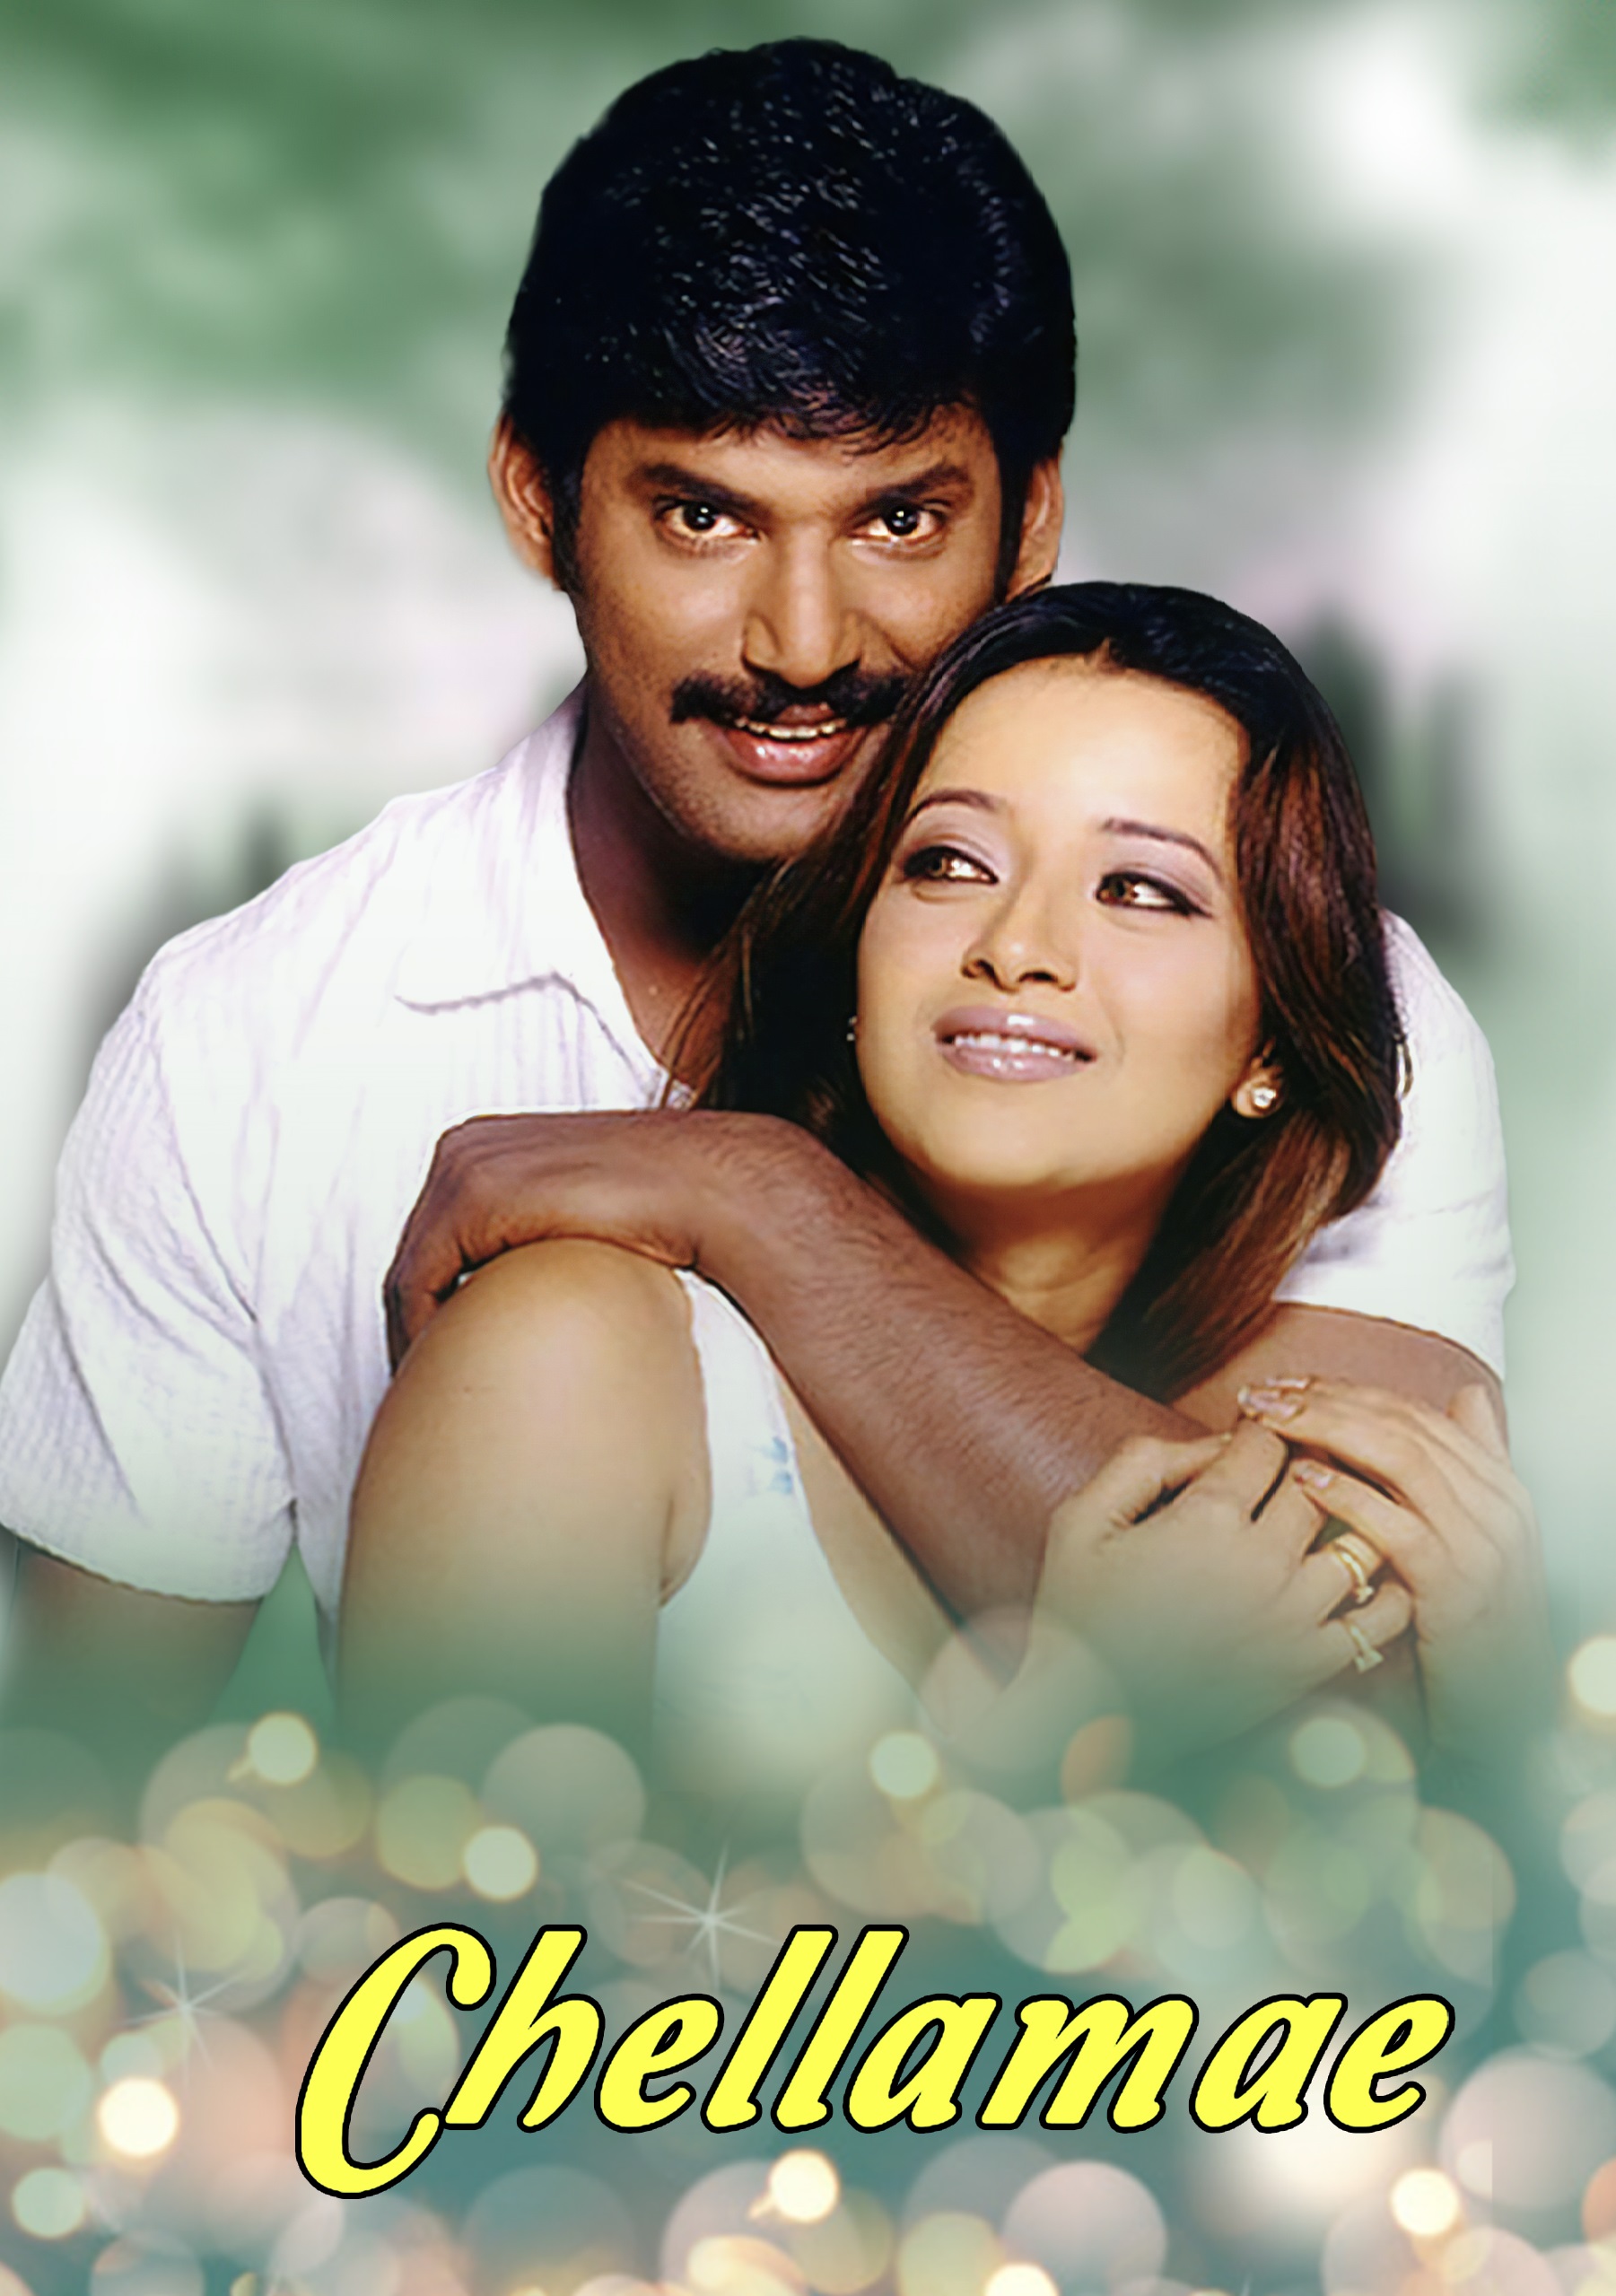 Chellamae 2004 Tamil Action Movie Online